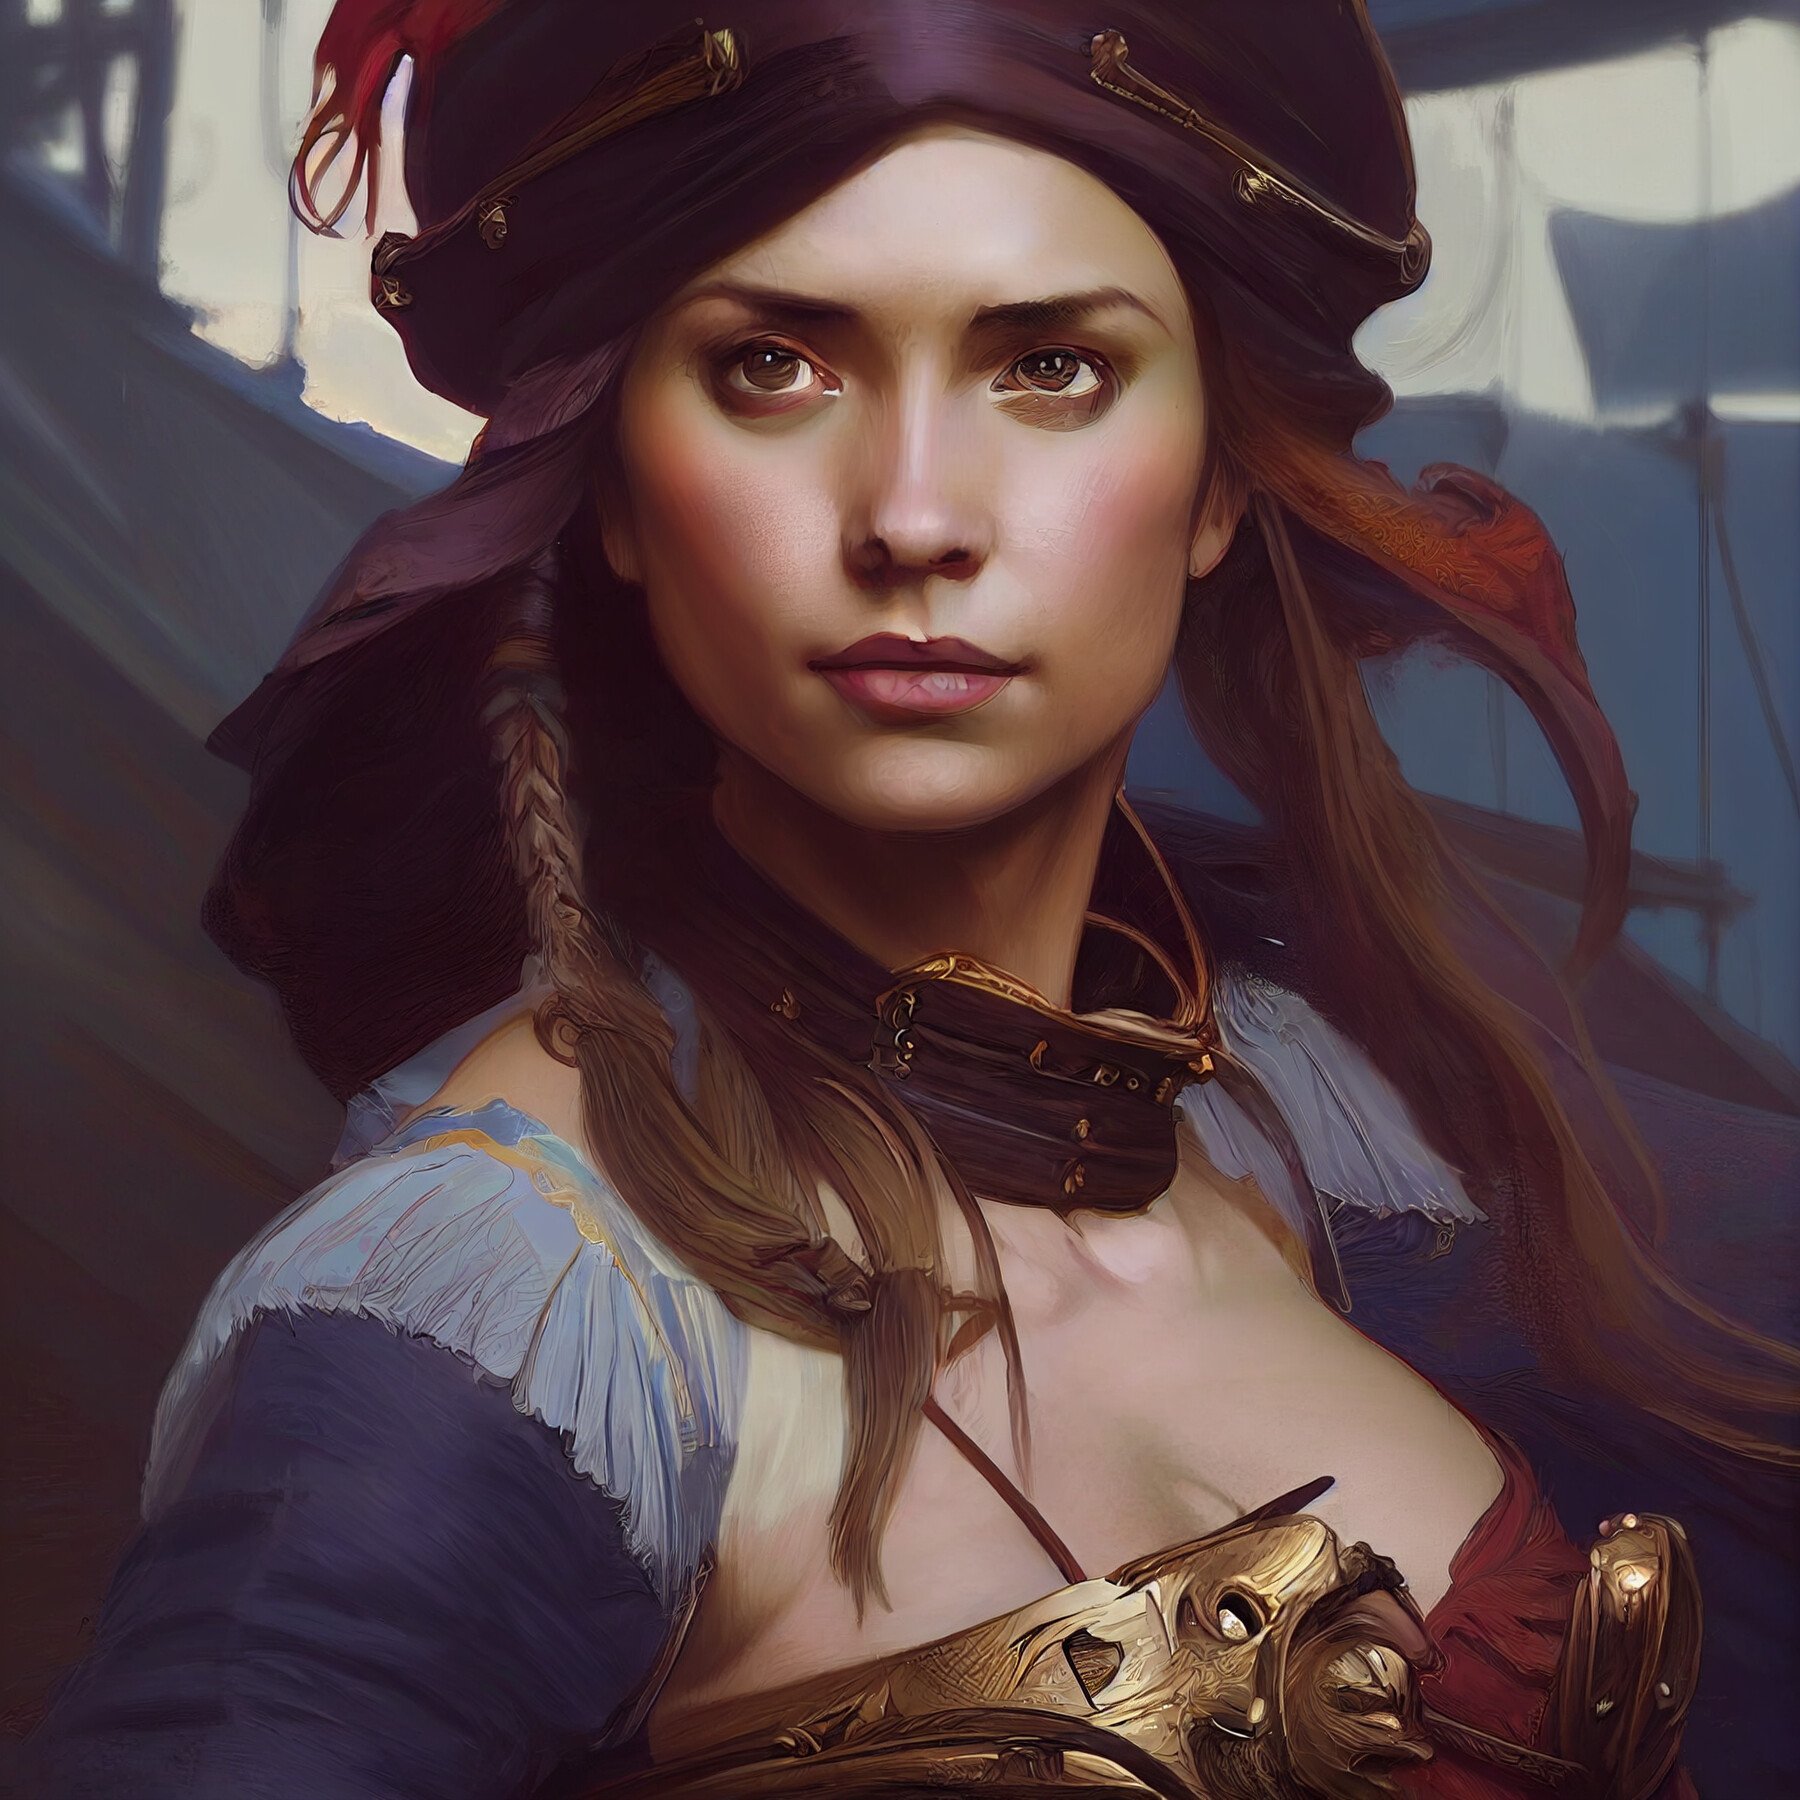 pirate woman